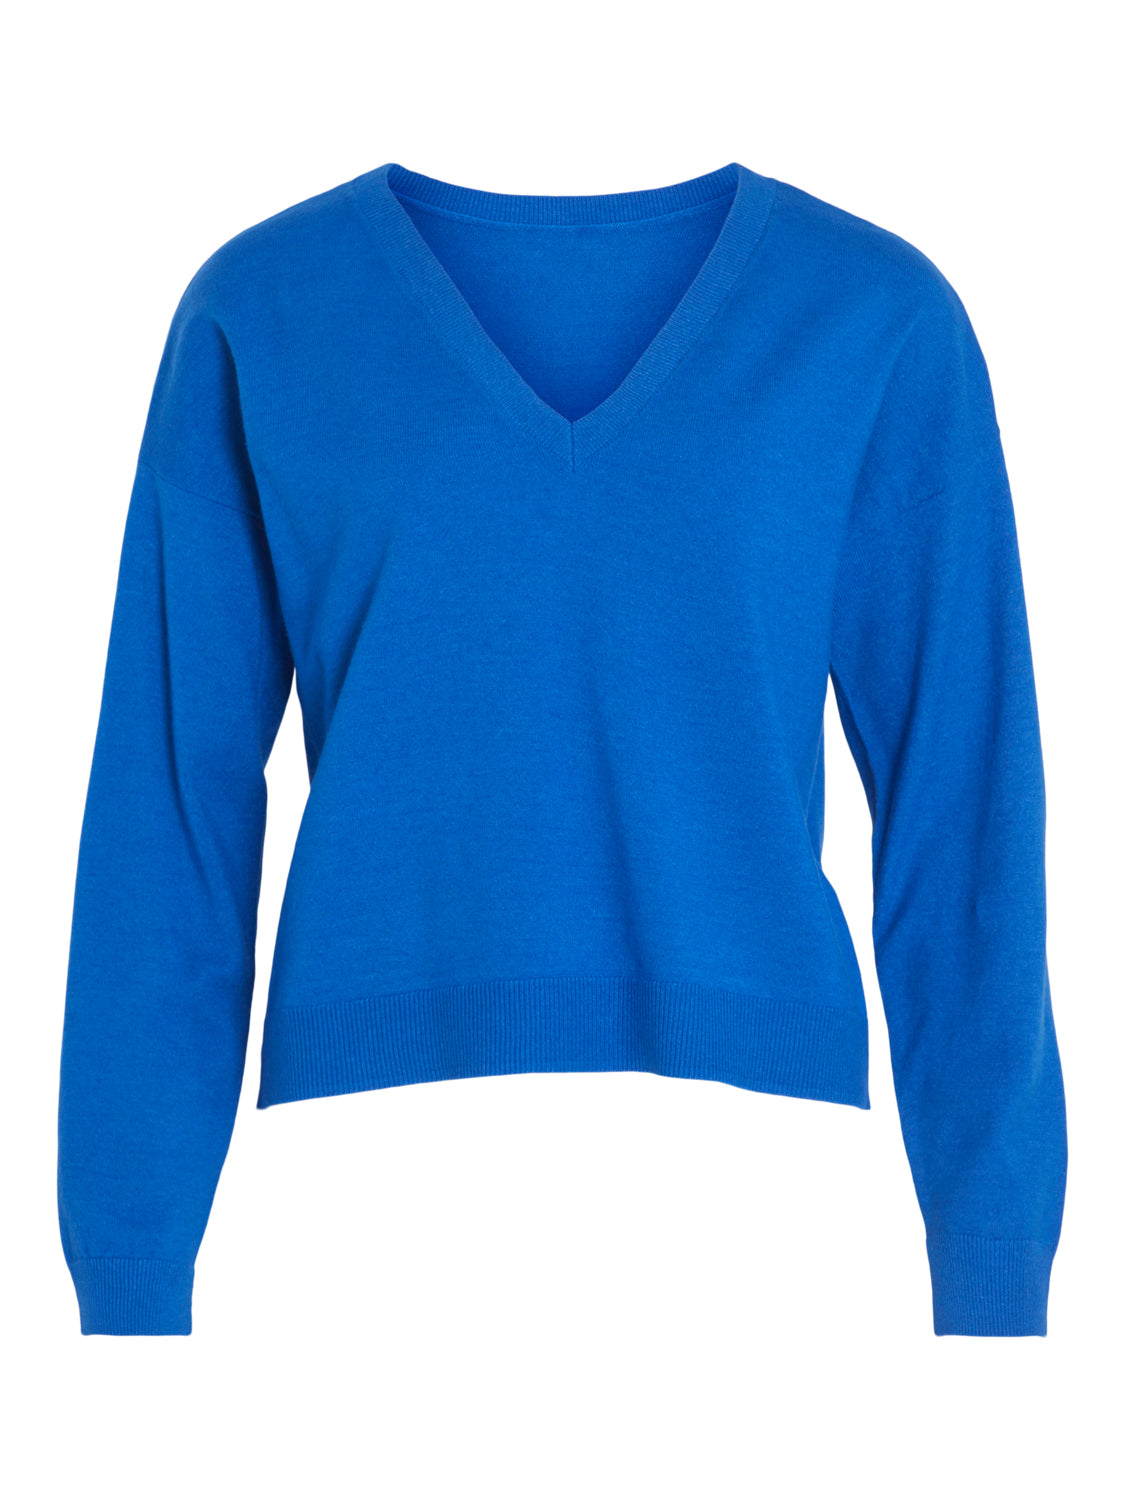 VICOMFY Pullover - Lapis Blue